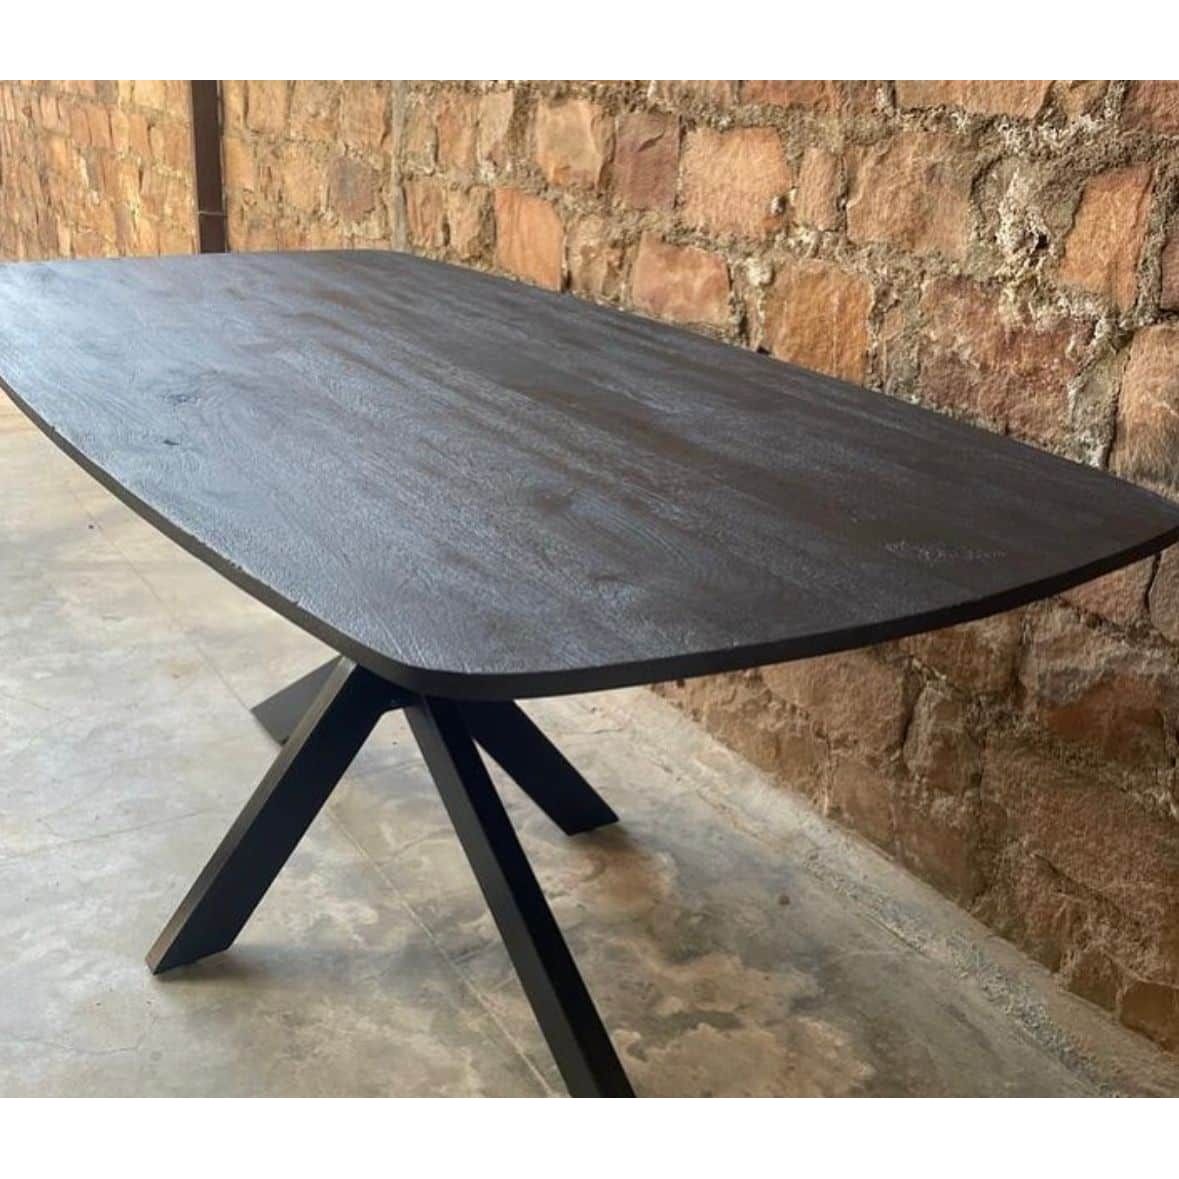 Bahia table Danish oval black - 140cm